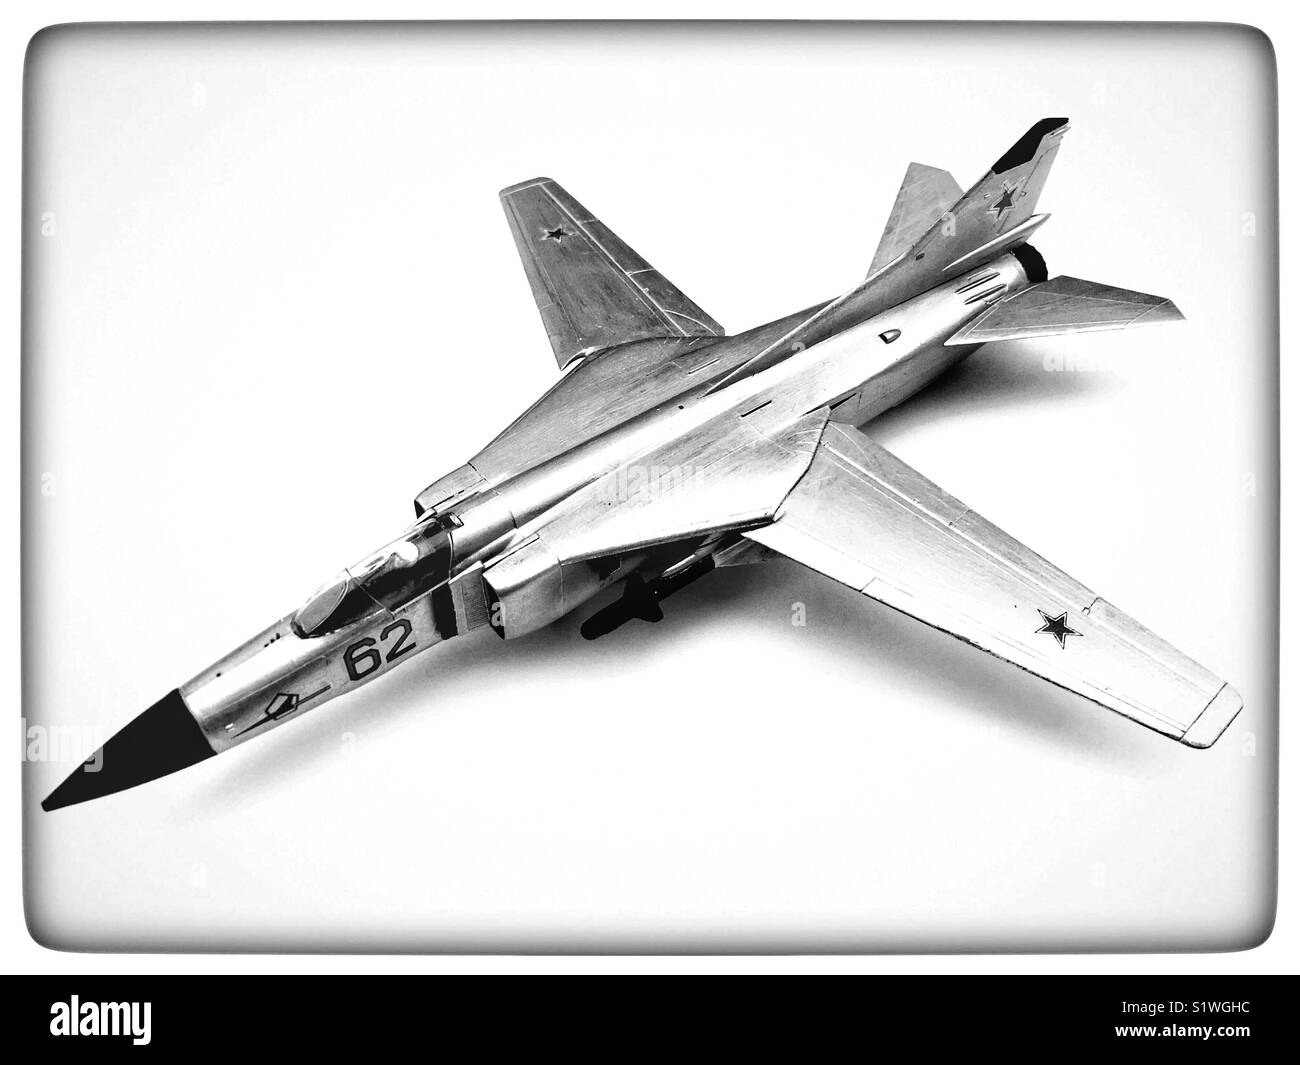 Soviet jet fighter model Stock Photo